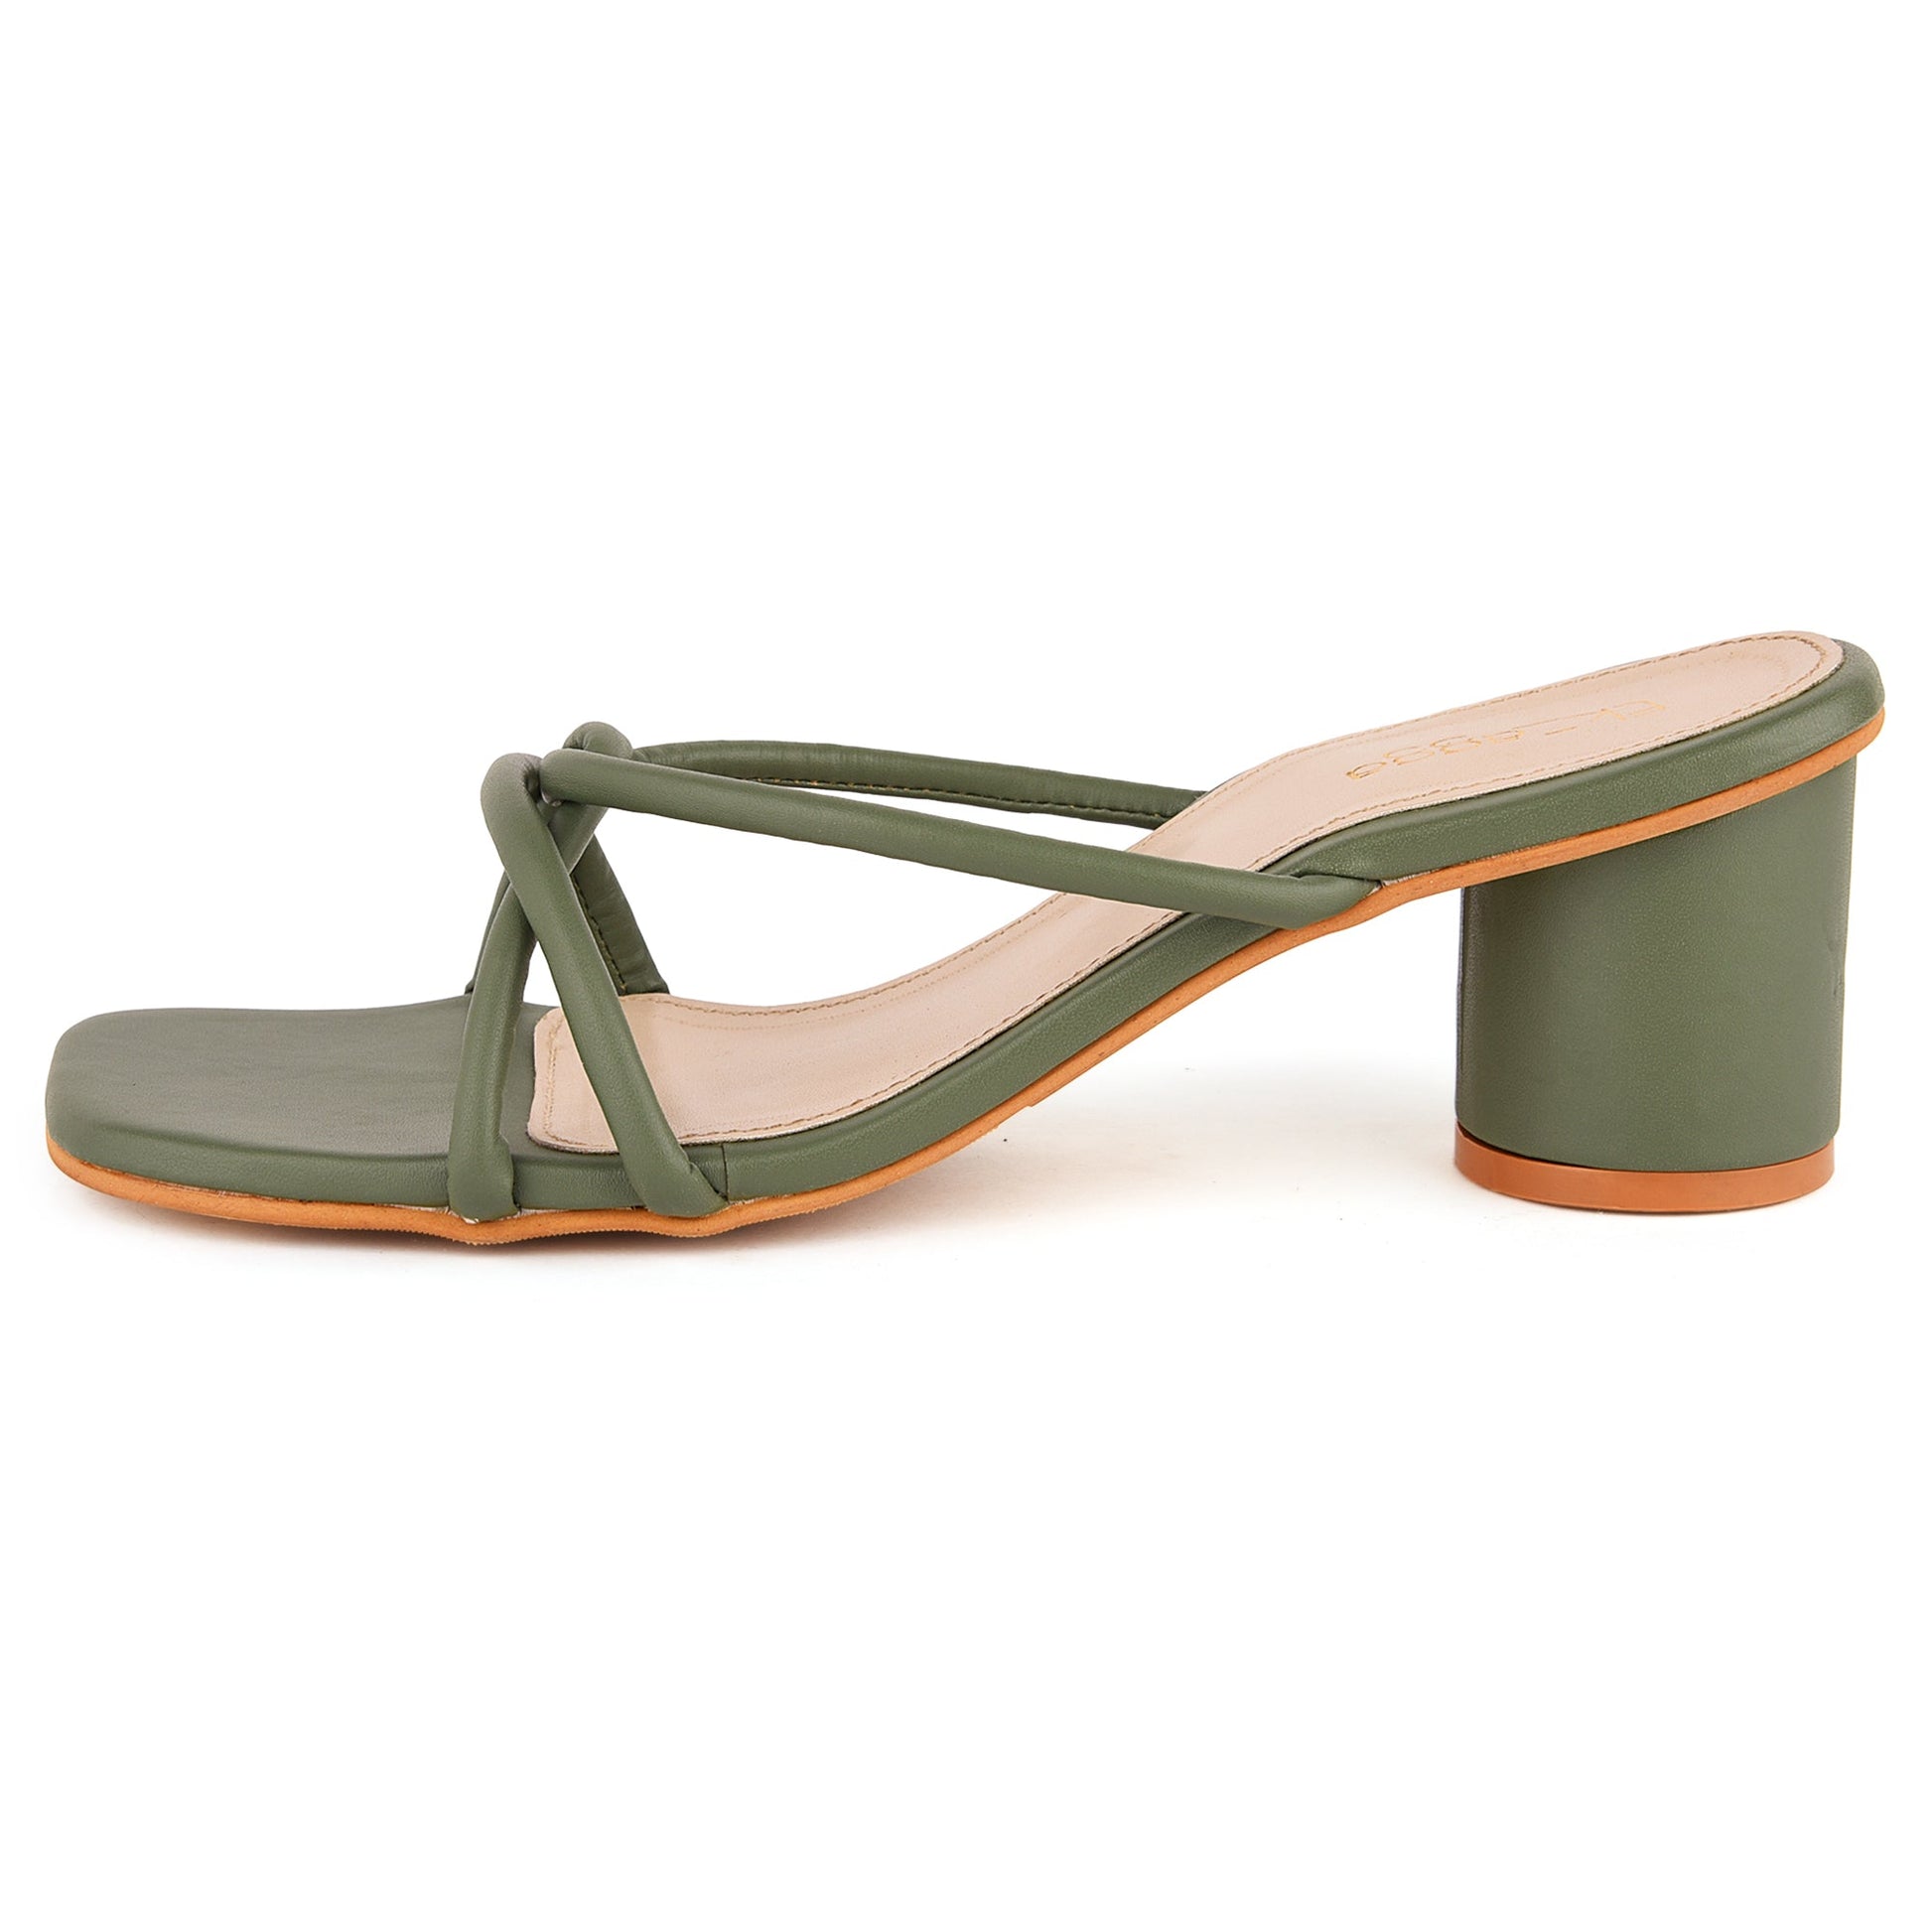 Green Stap Heels at Kamakhyaa by EK_agga. This item is Block Heels, Green, Heels, Less than $50, Party Wear, Patent leather, Solids, Square toe, Vegan